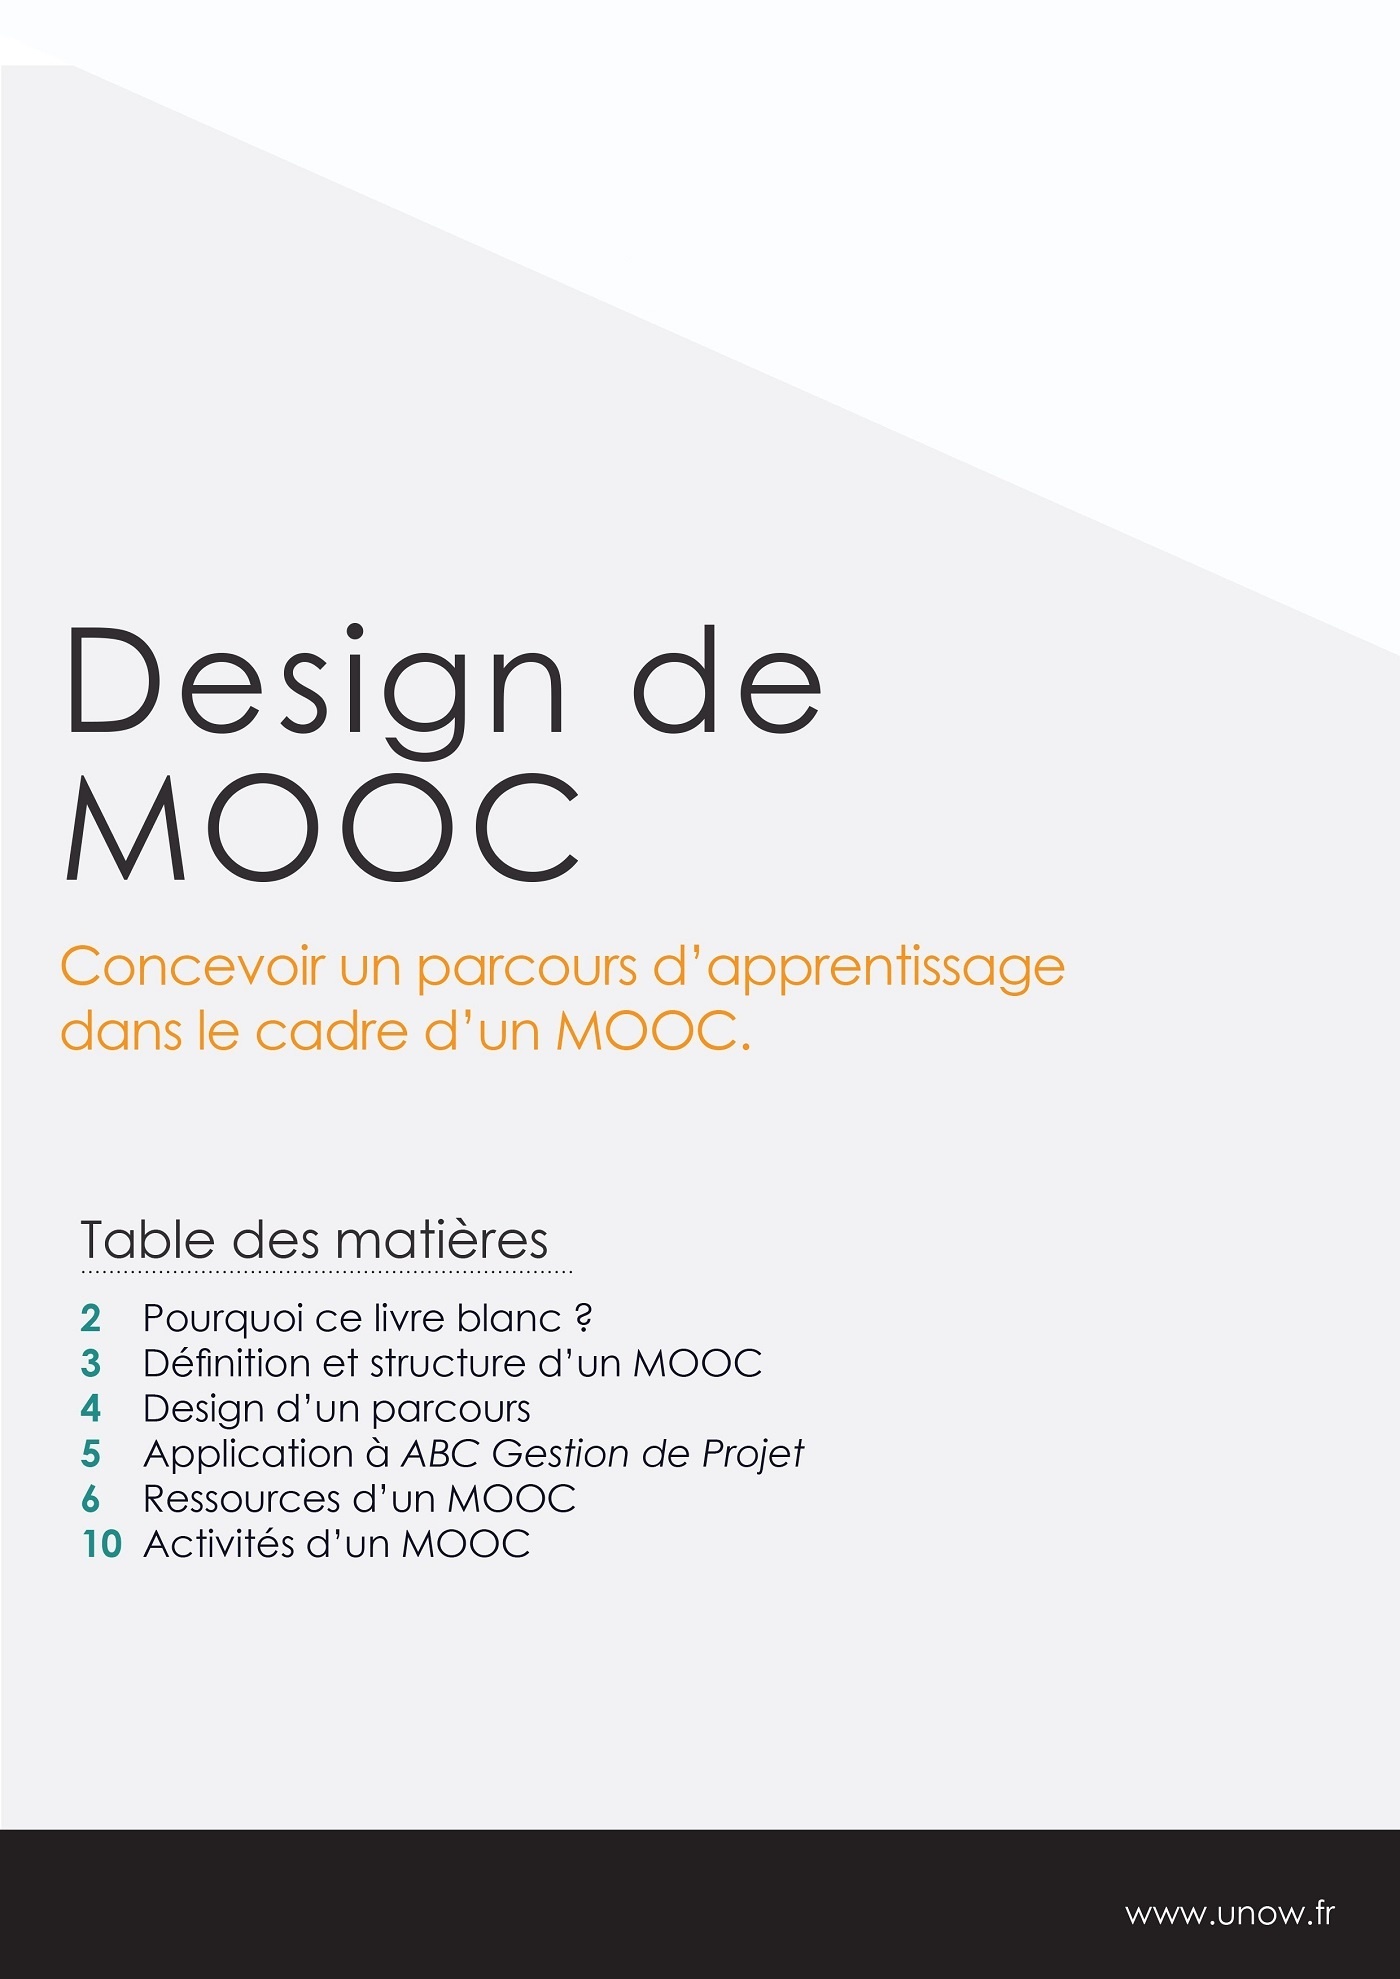 Design-de-MOOC_Unow.jpg